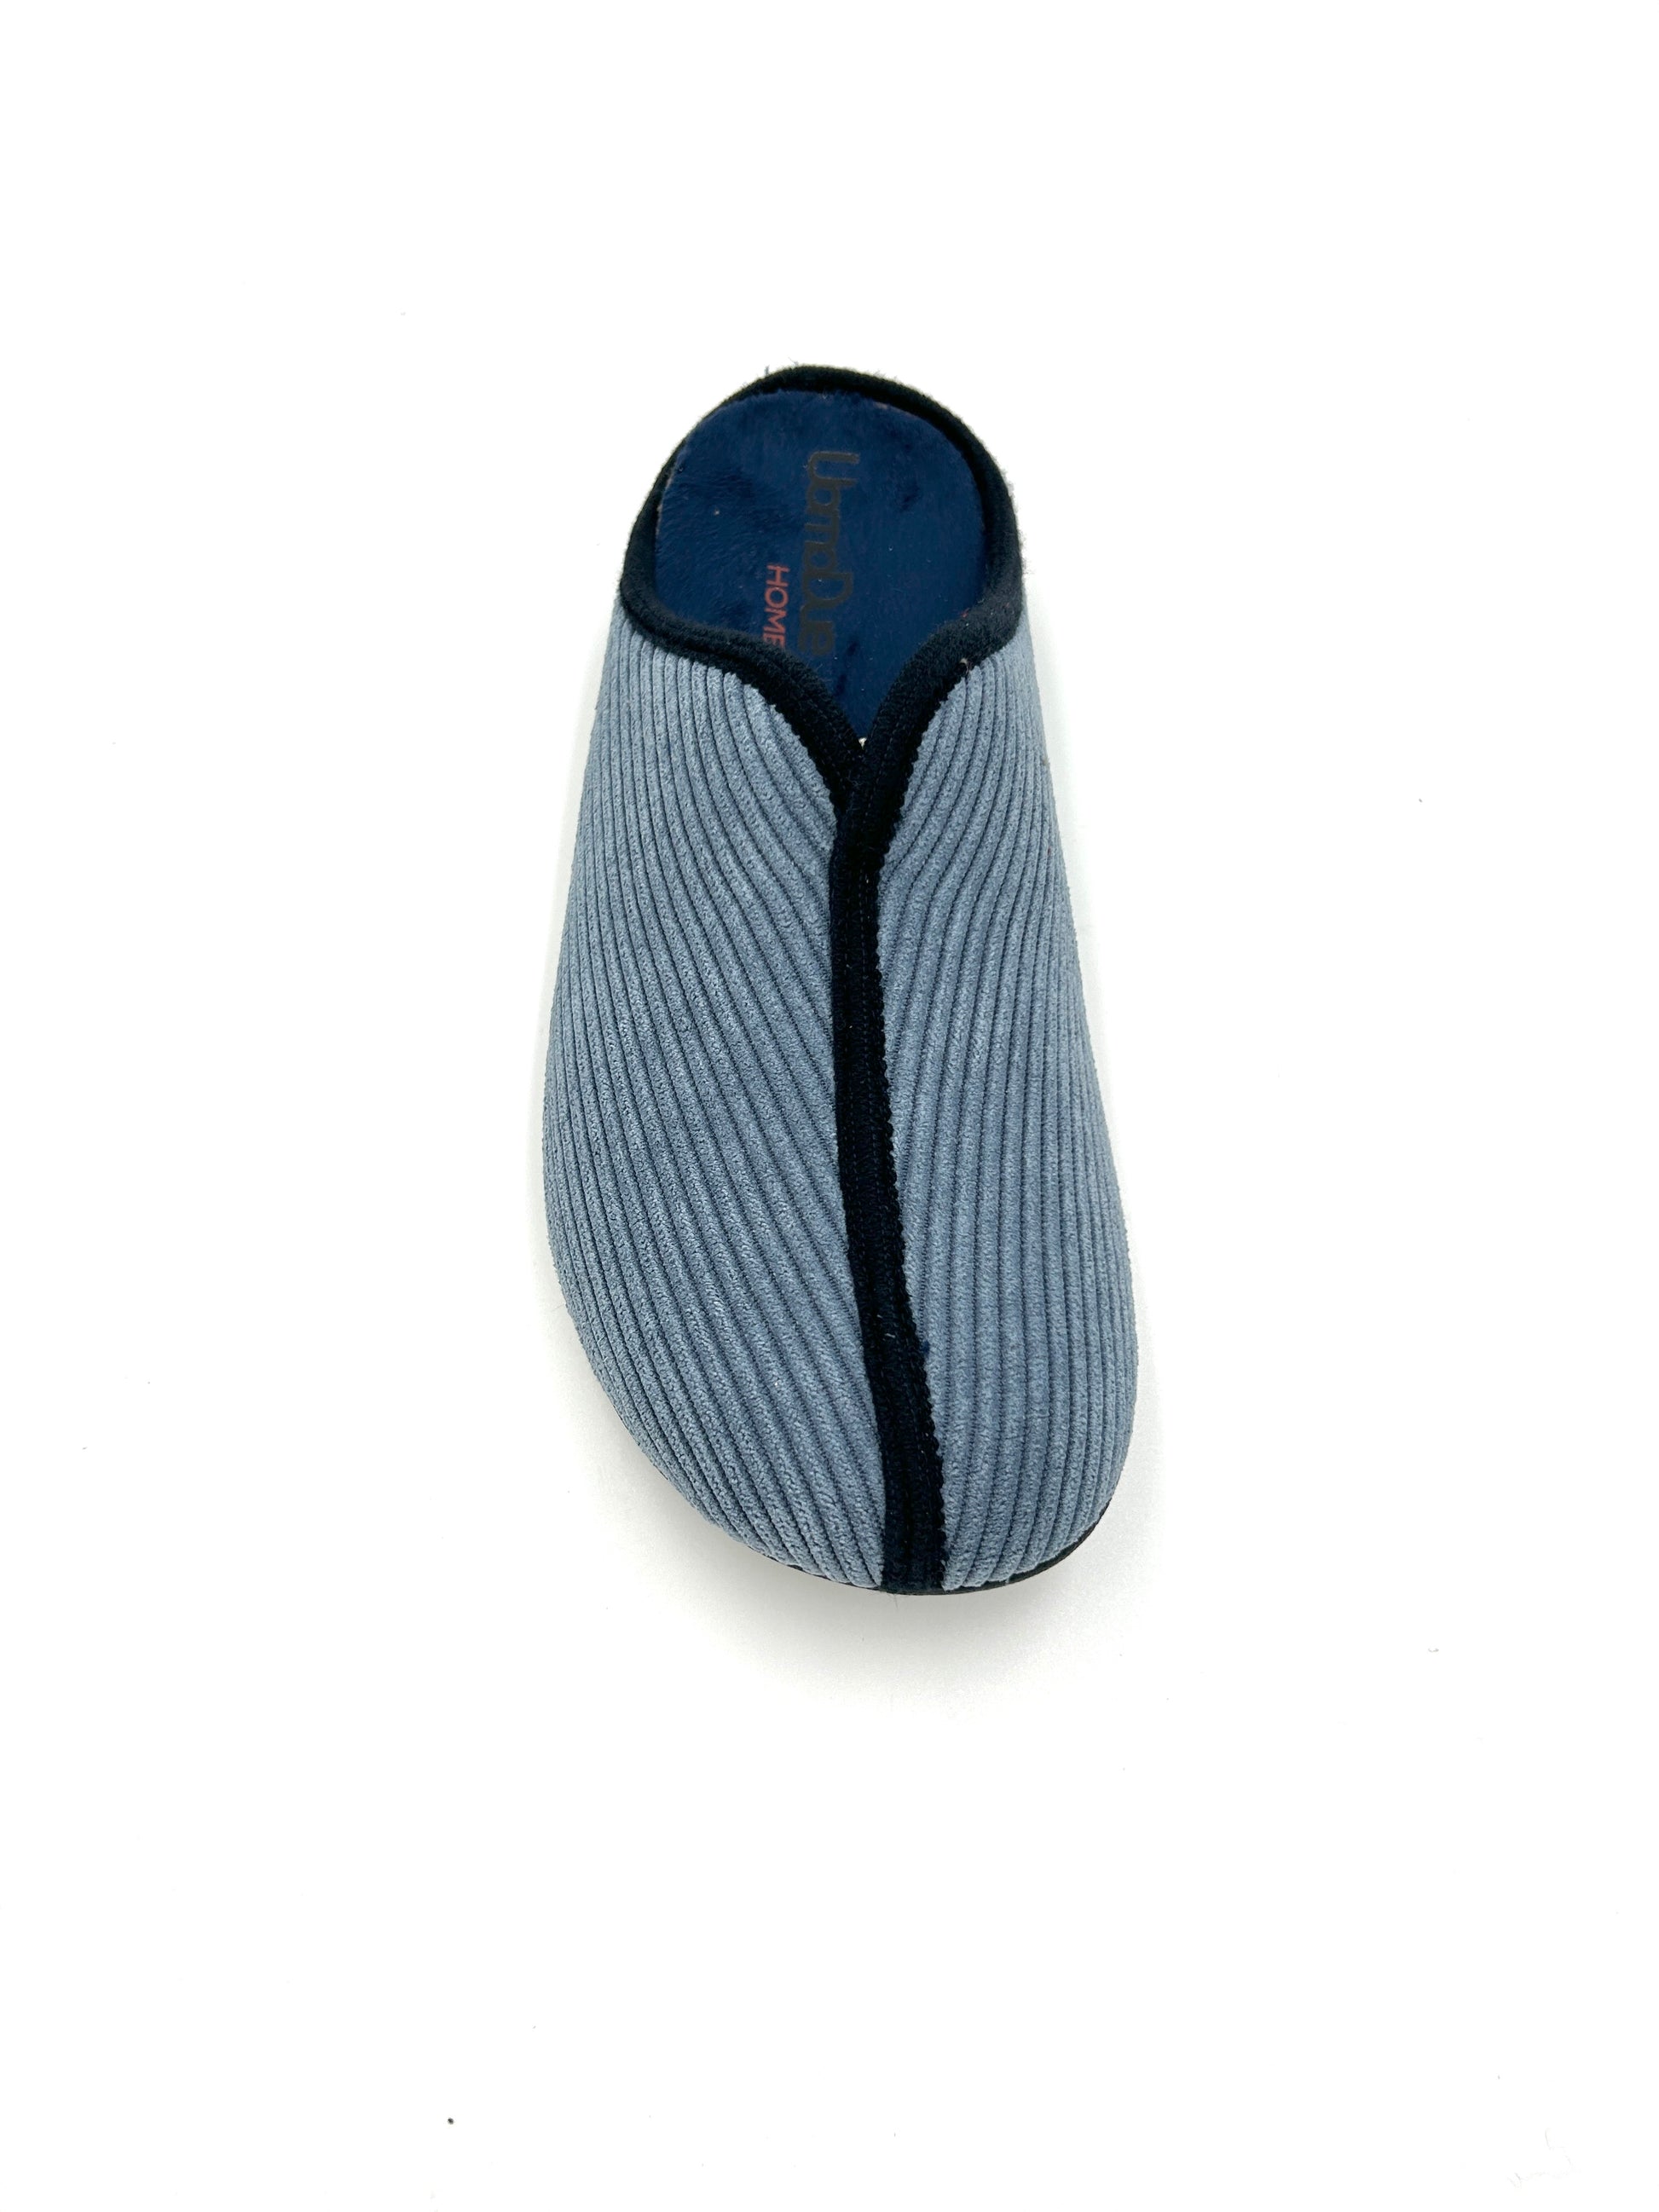 Uomo Due Pantofola Ciabatta chiusa a righe - grigio e blu - Sebastiano Calzature